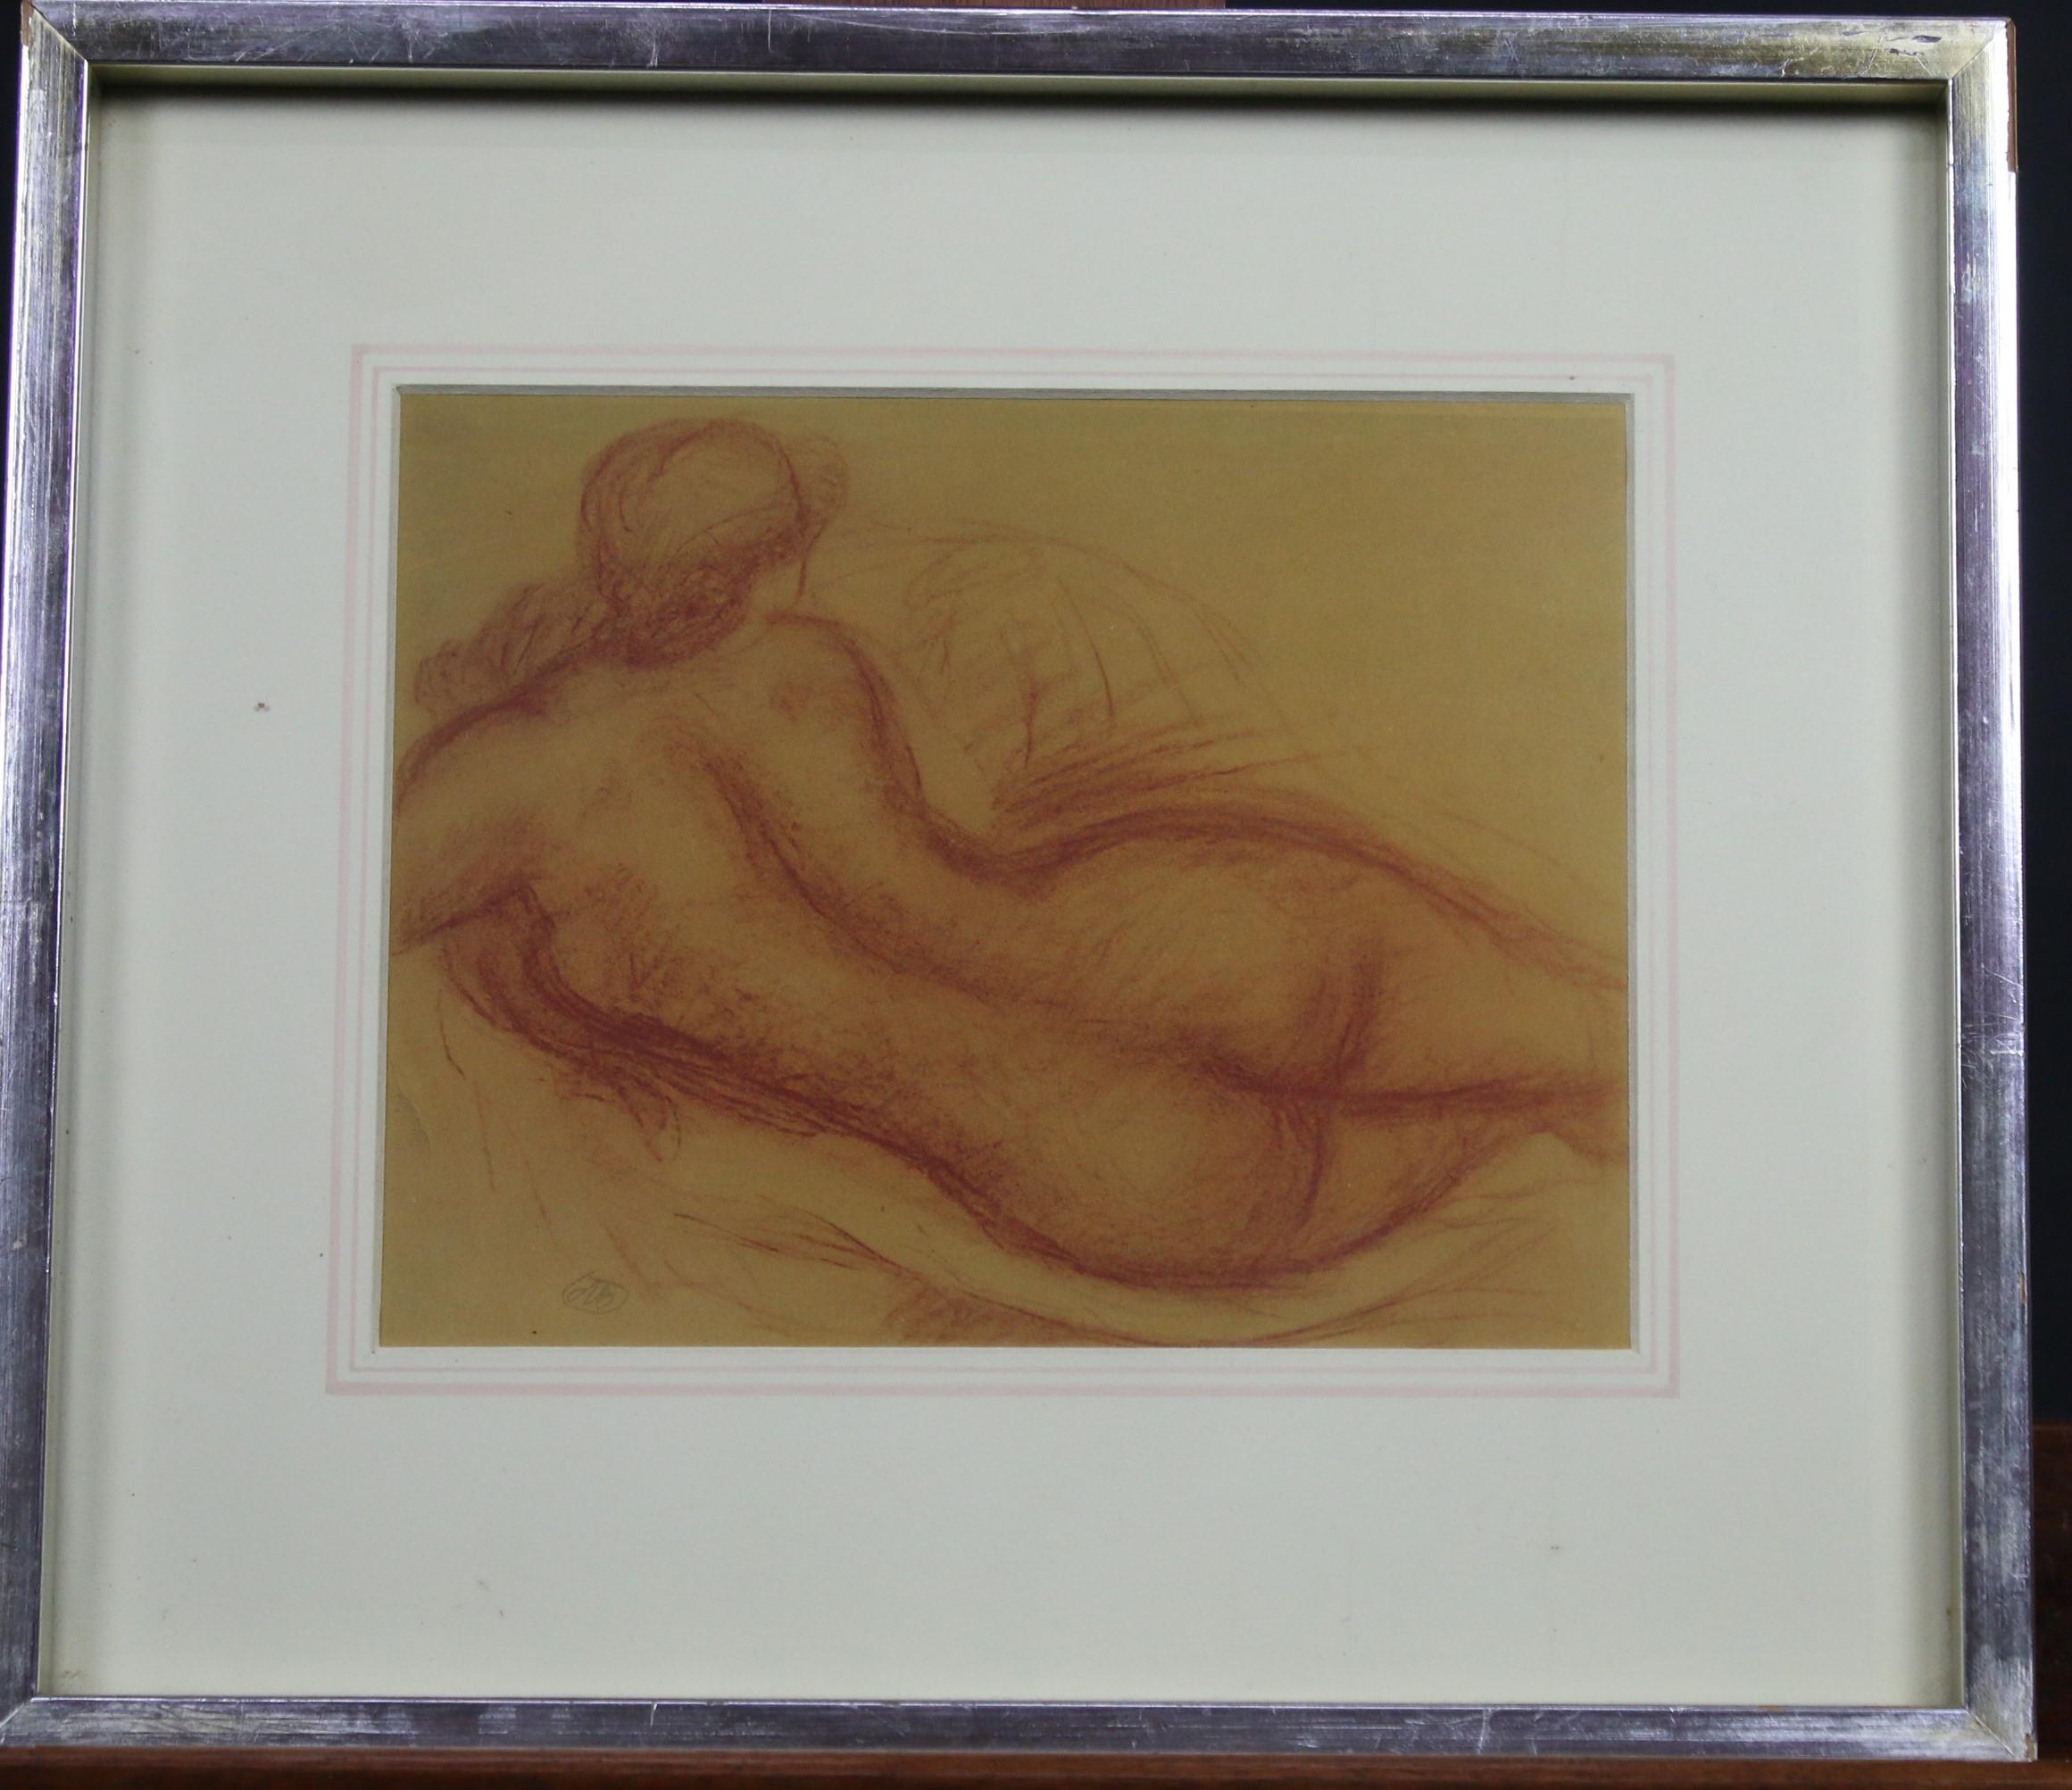 Colotype print reclining nude, monogram imprinted.